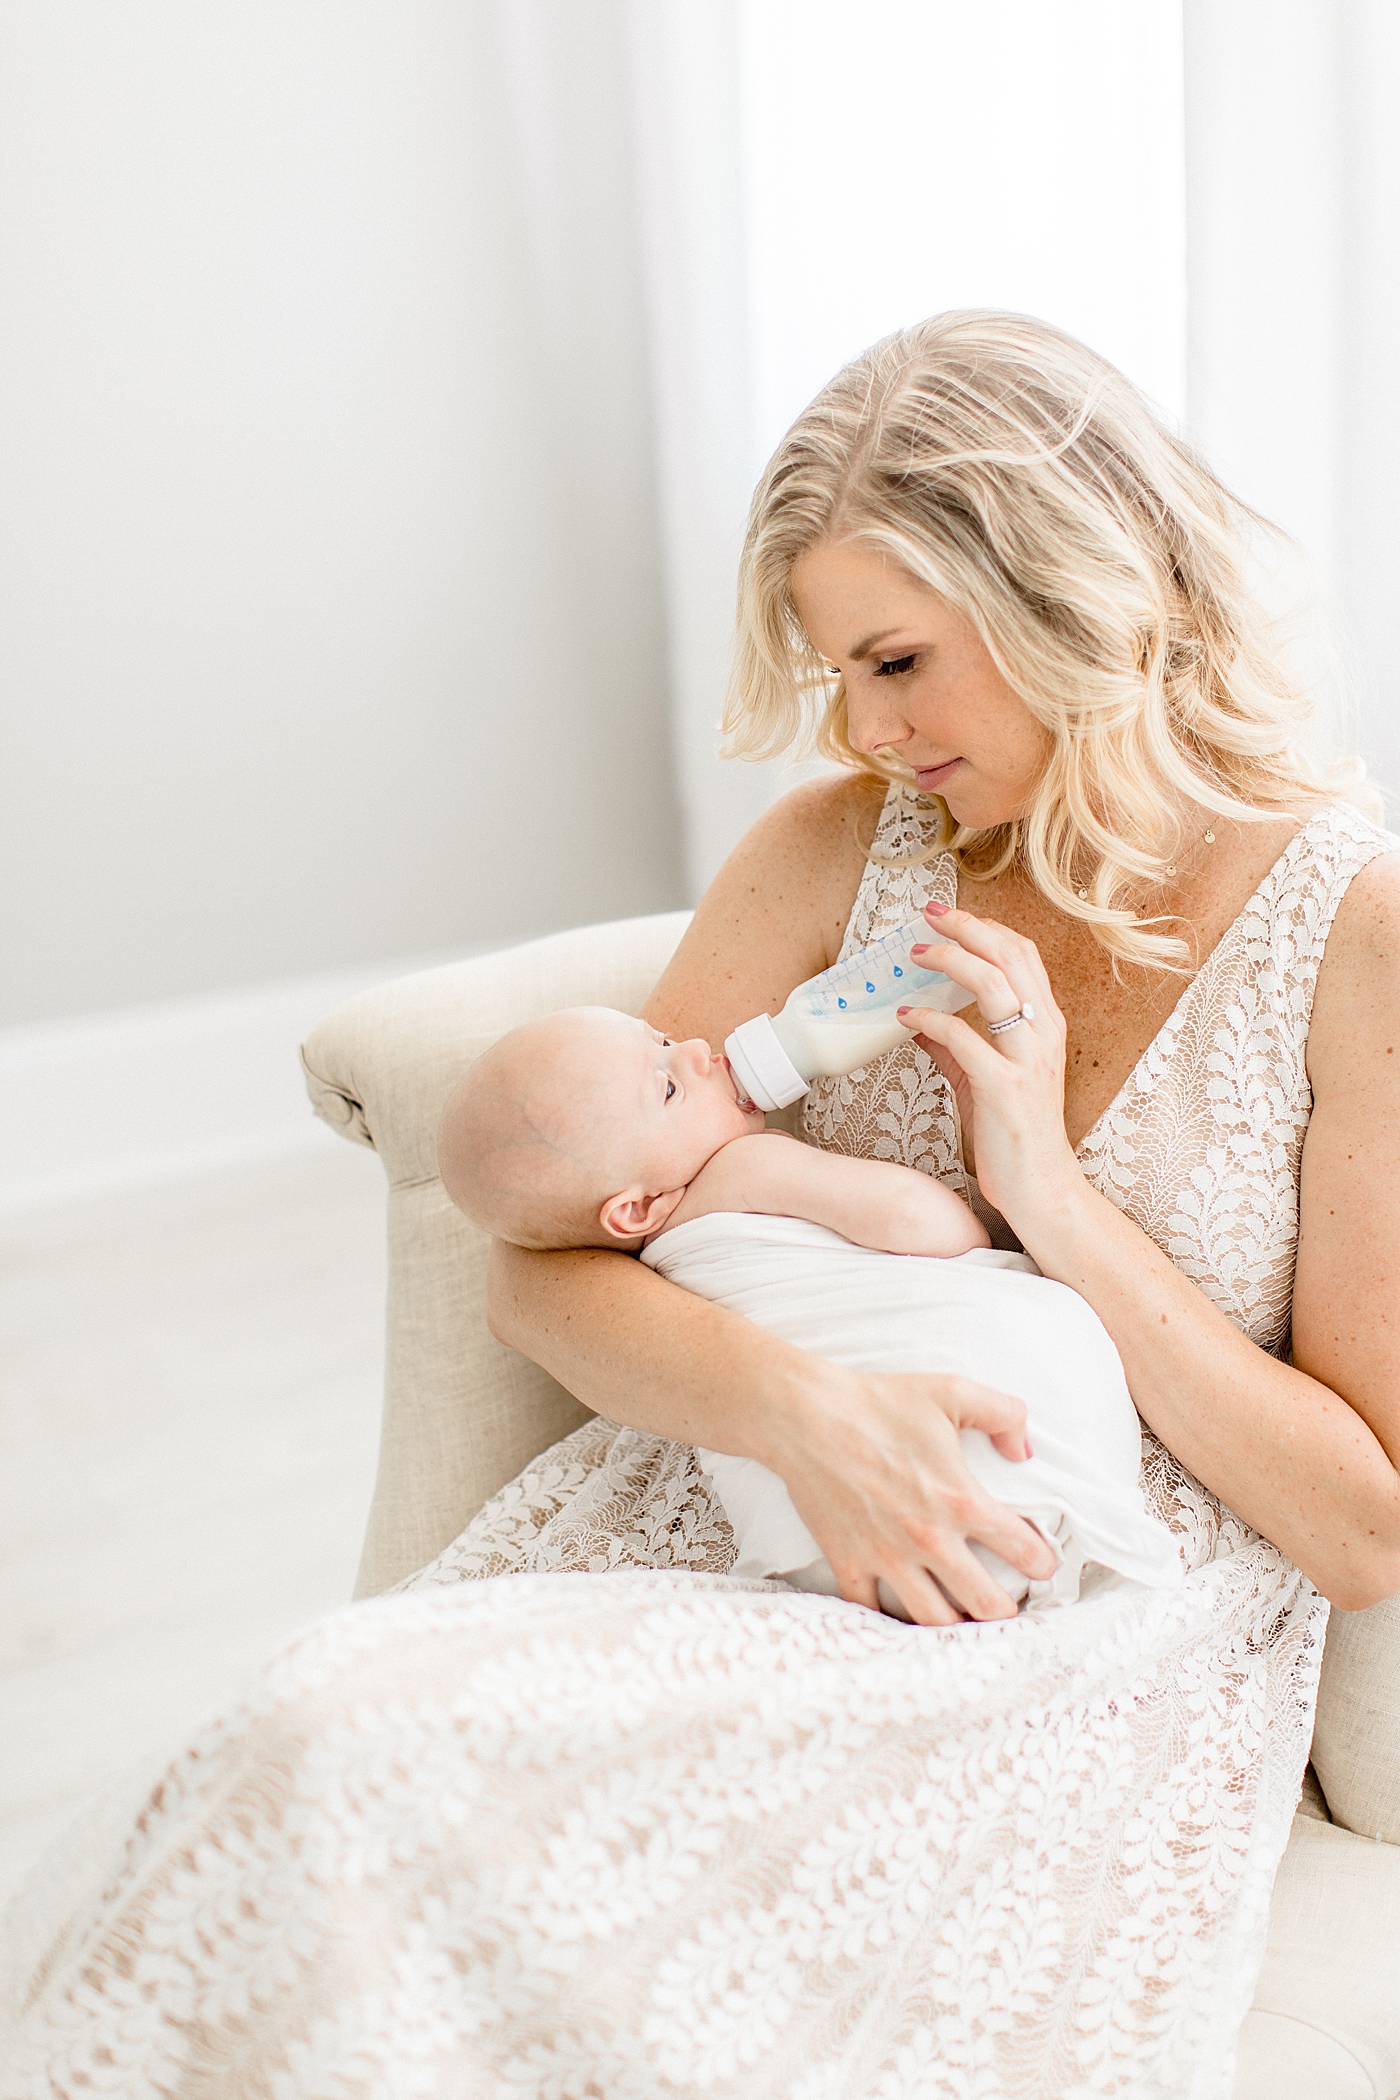 Mom bottle feeding baby breastmilk. Photo by Brittany Elise Photography.